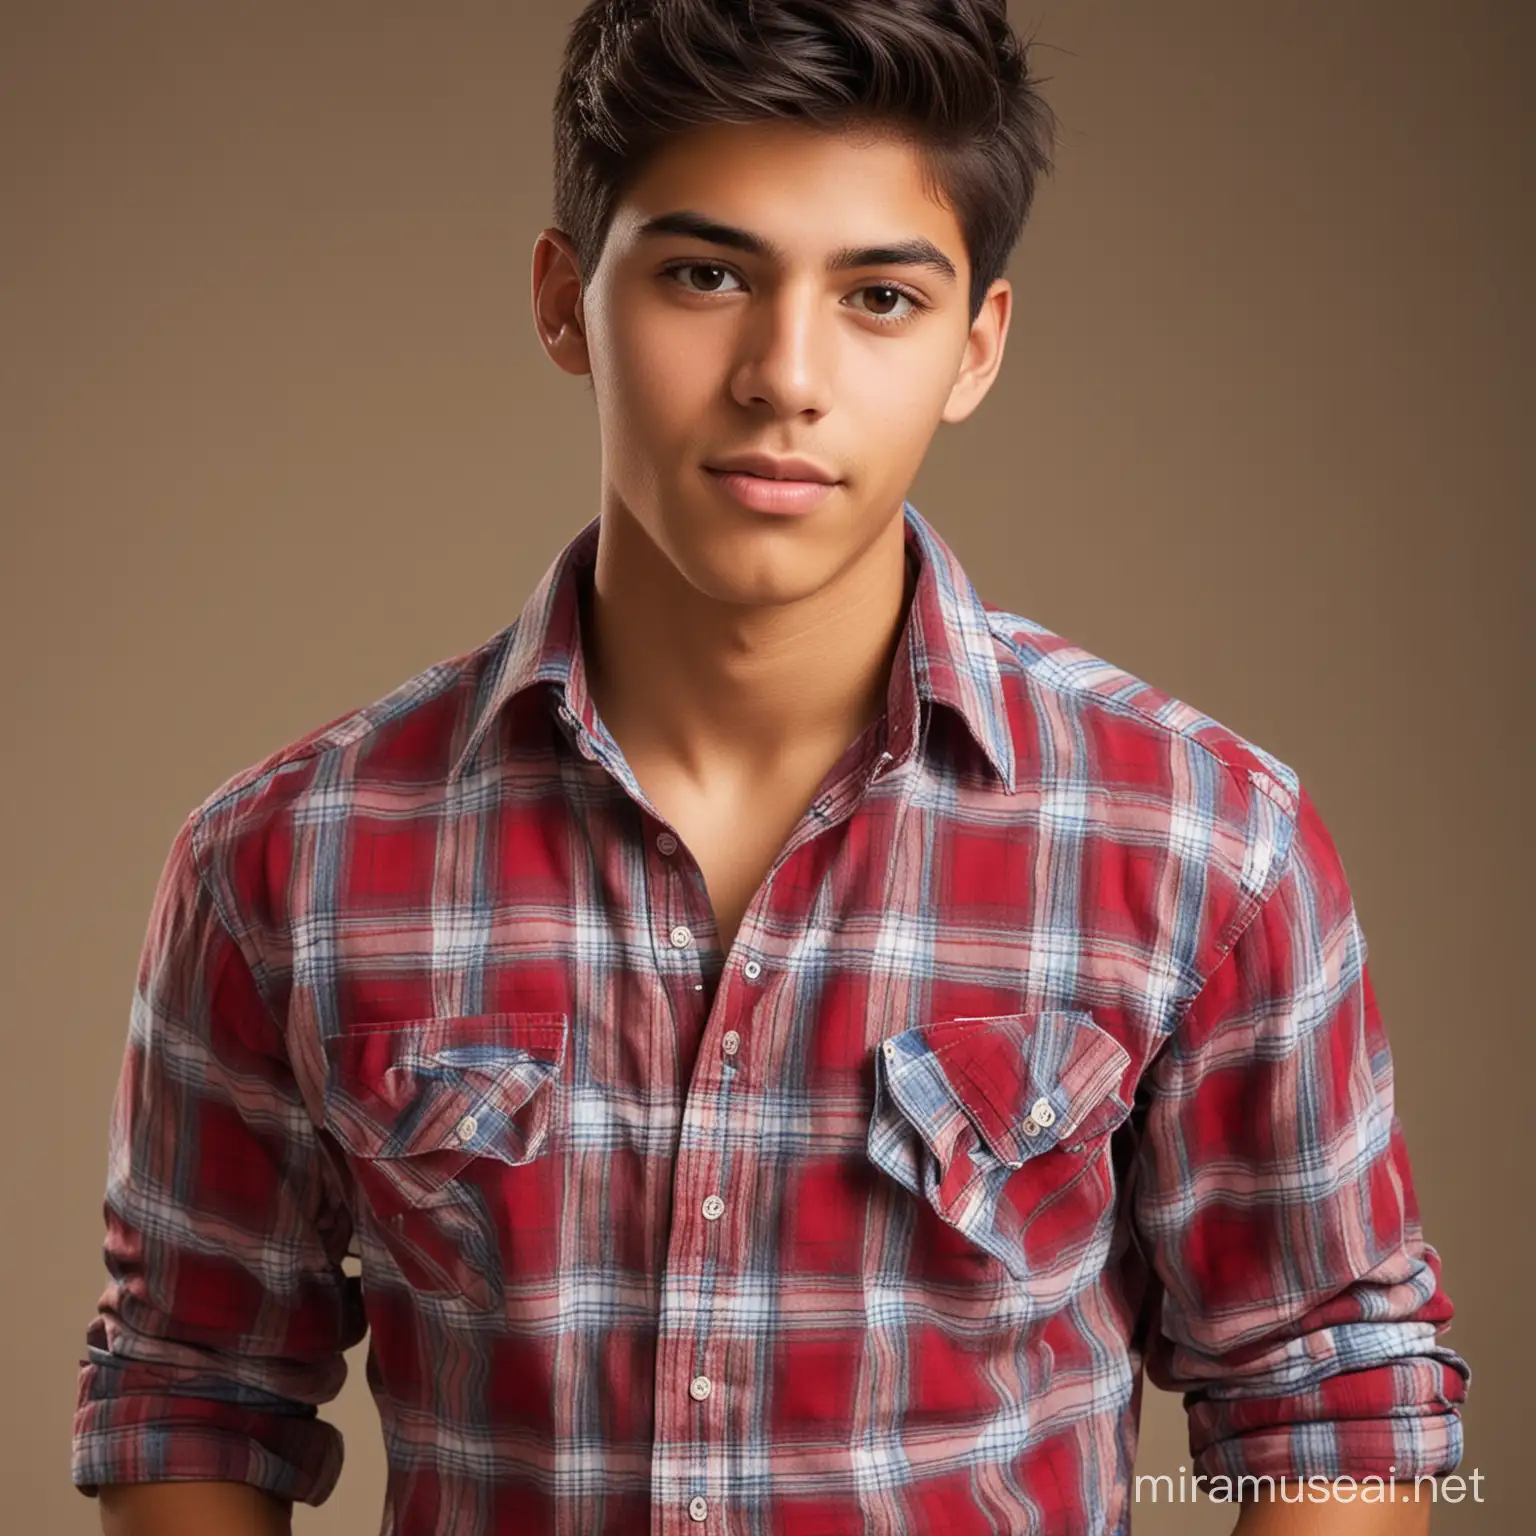 Young Hispanic Man in Stylish Plaid Shirt